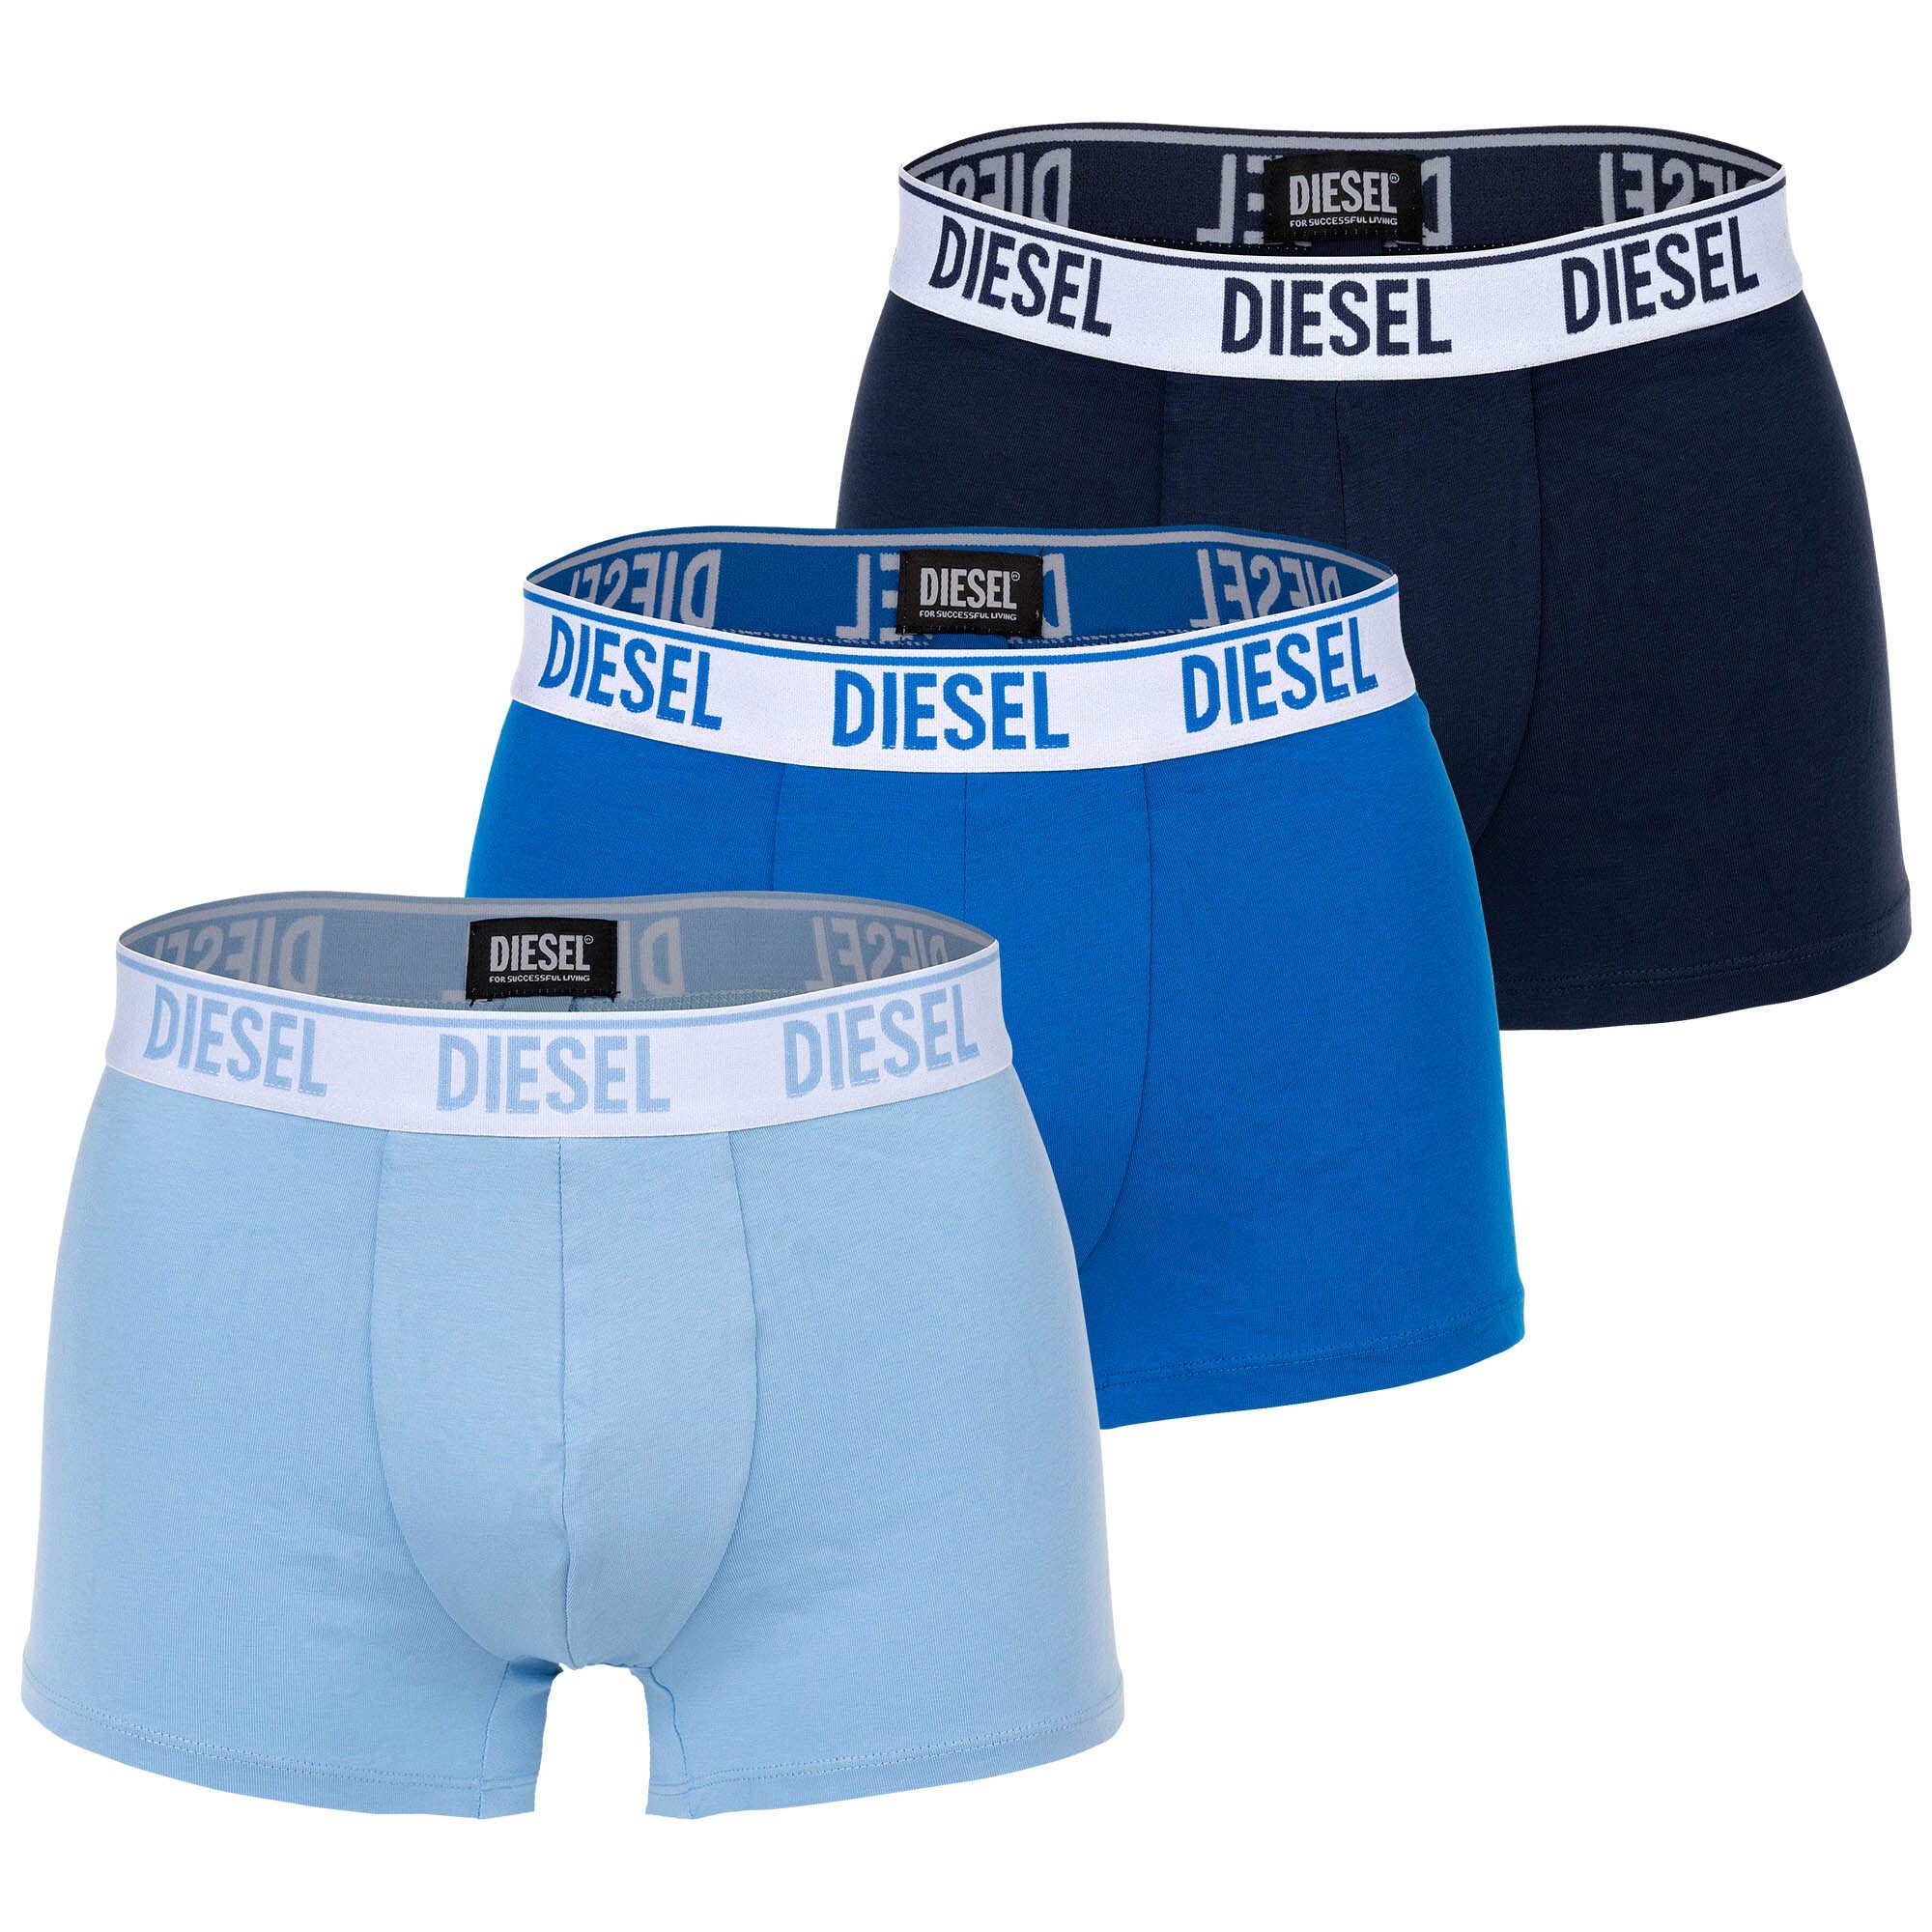 Diesel Boxer Herren Boxershorts, 3er Pack - Dunkelblau/Blau